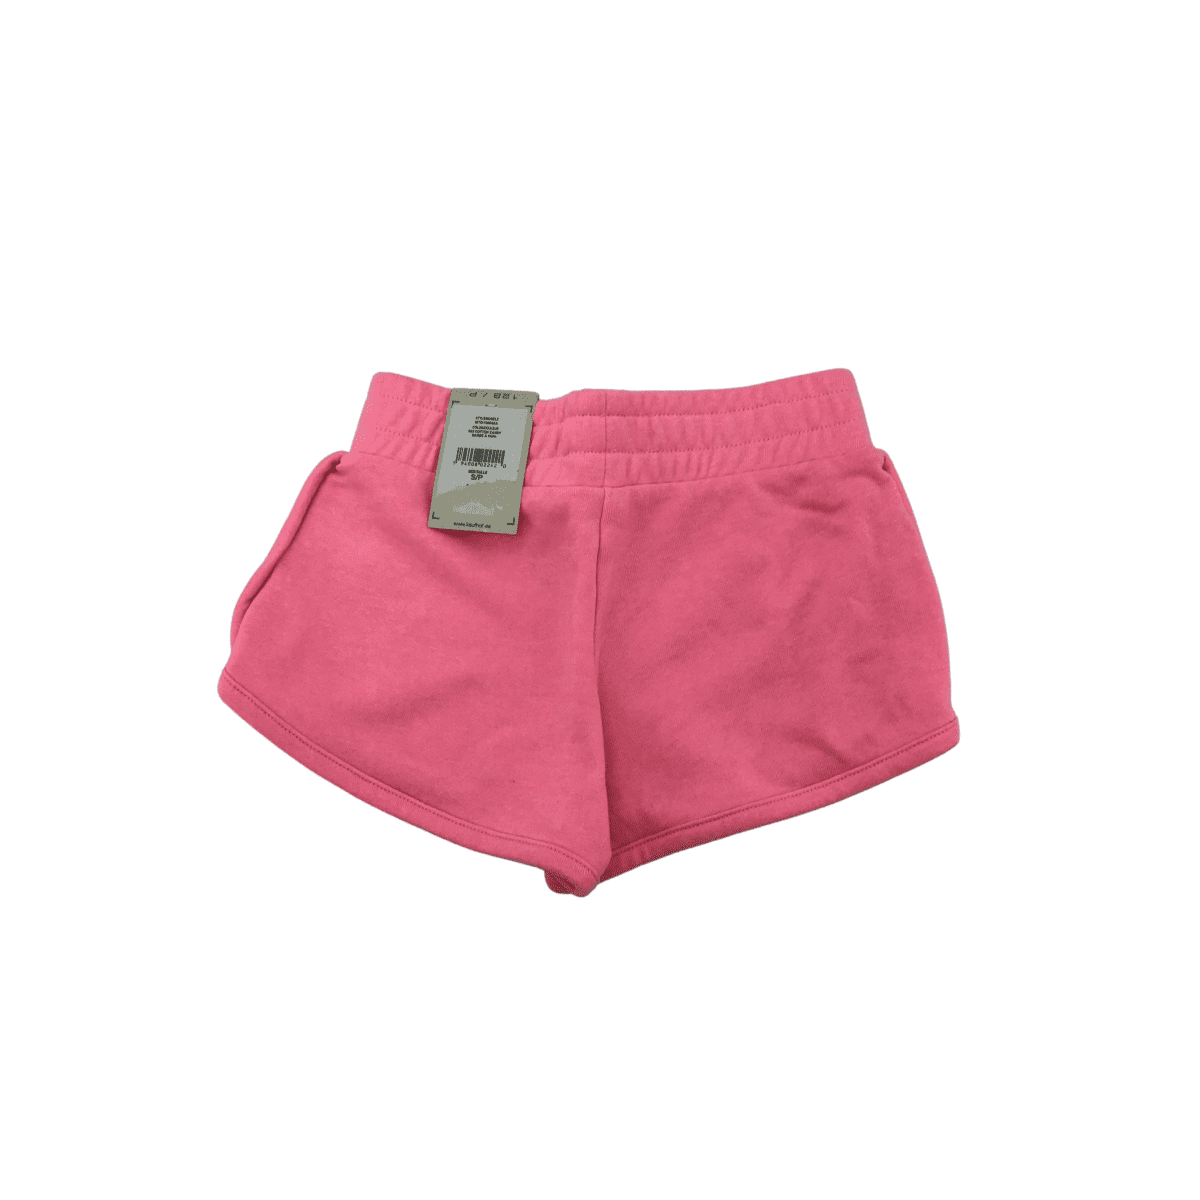 manguun girl's shorts 02